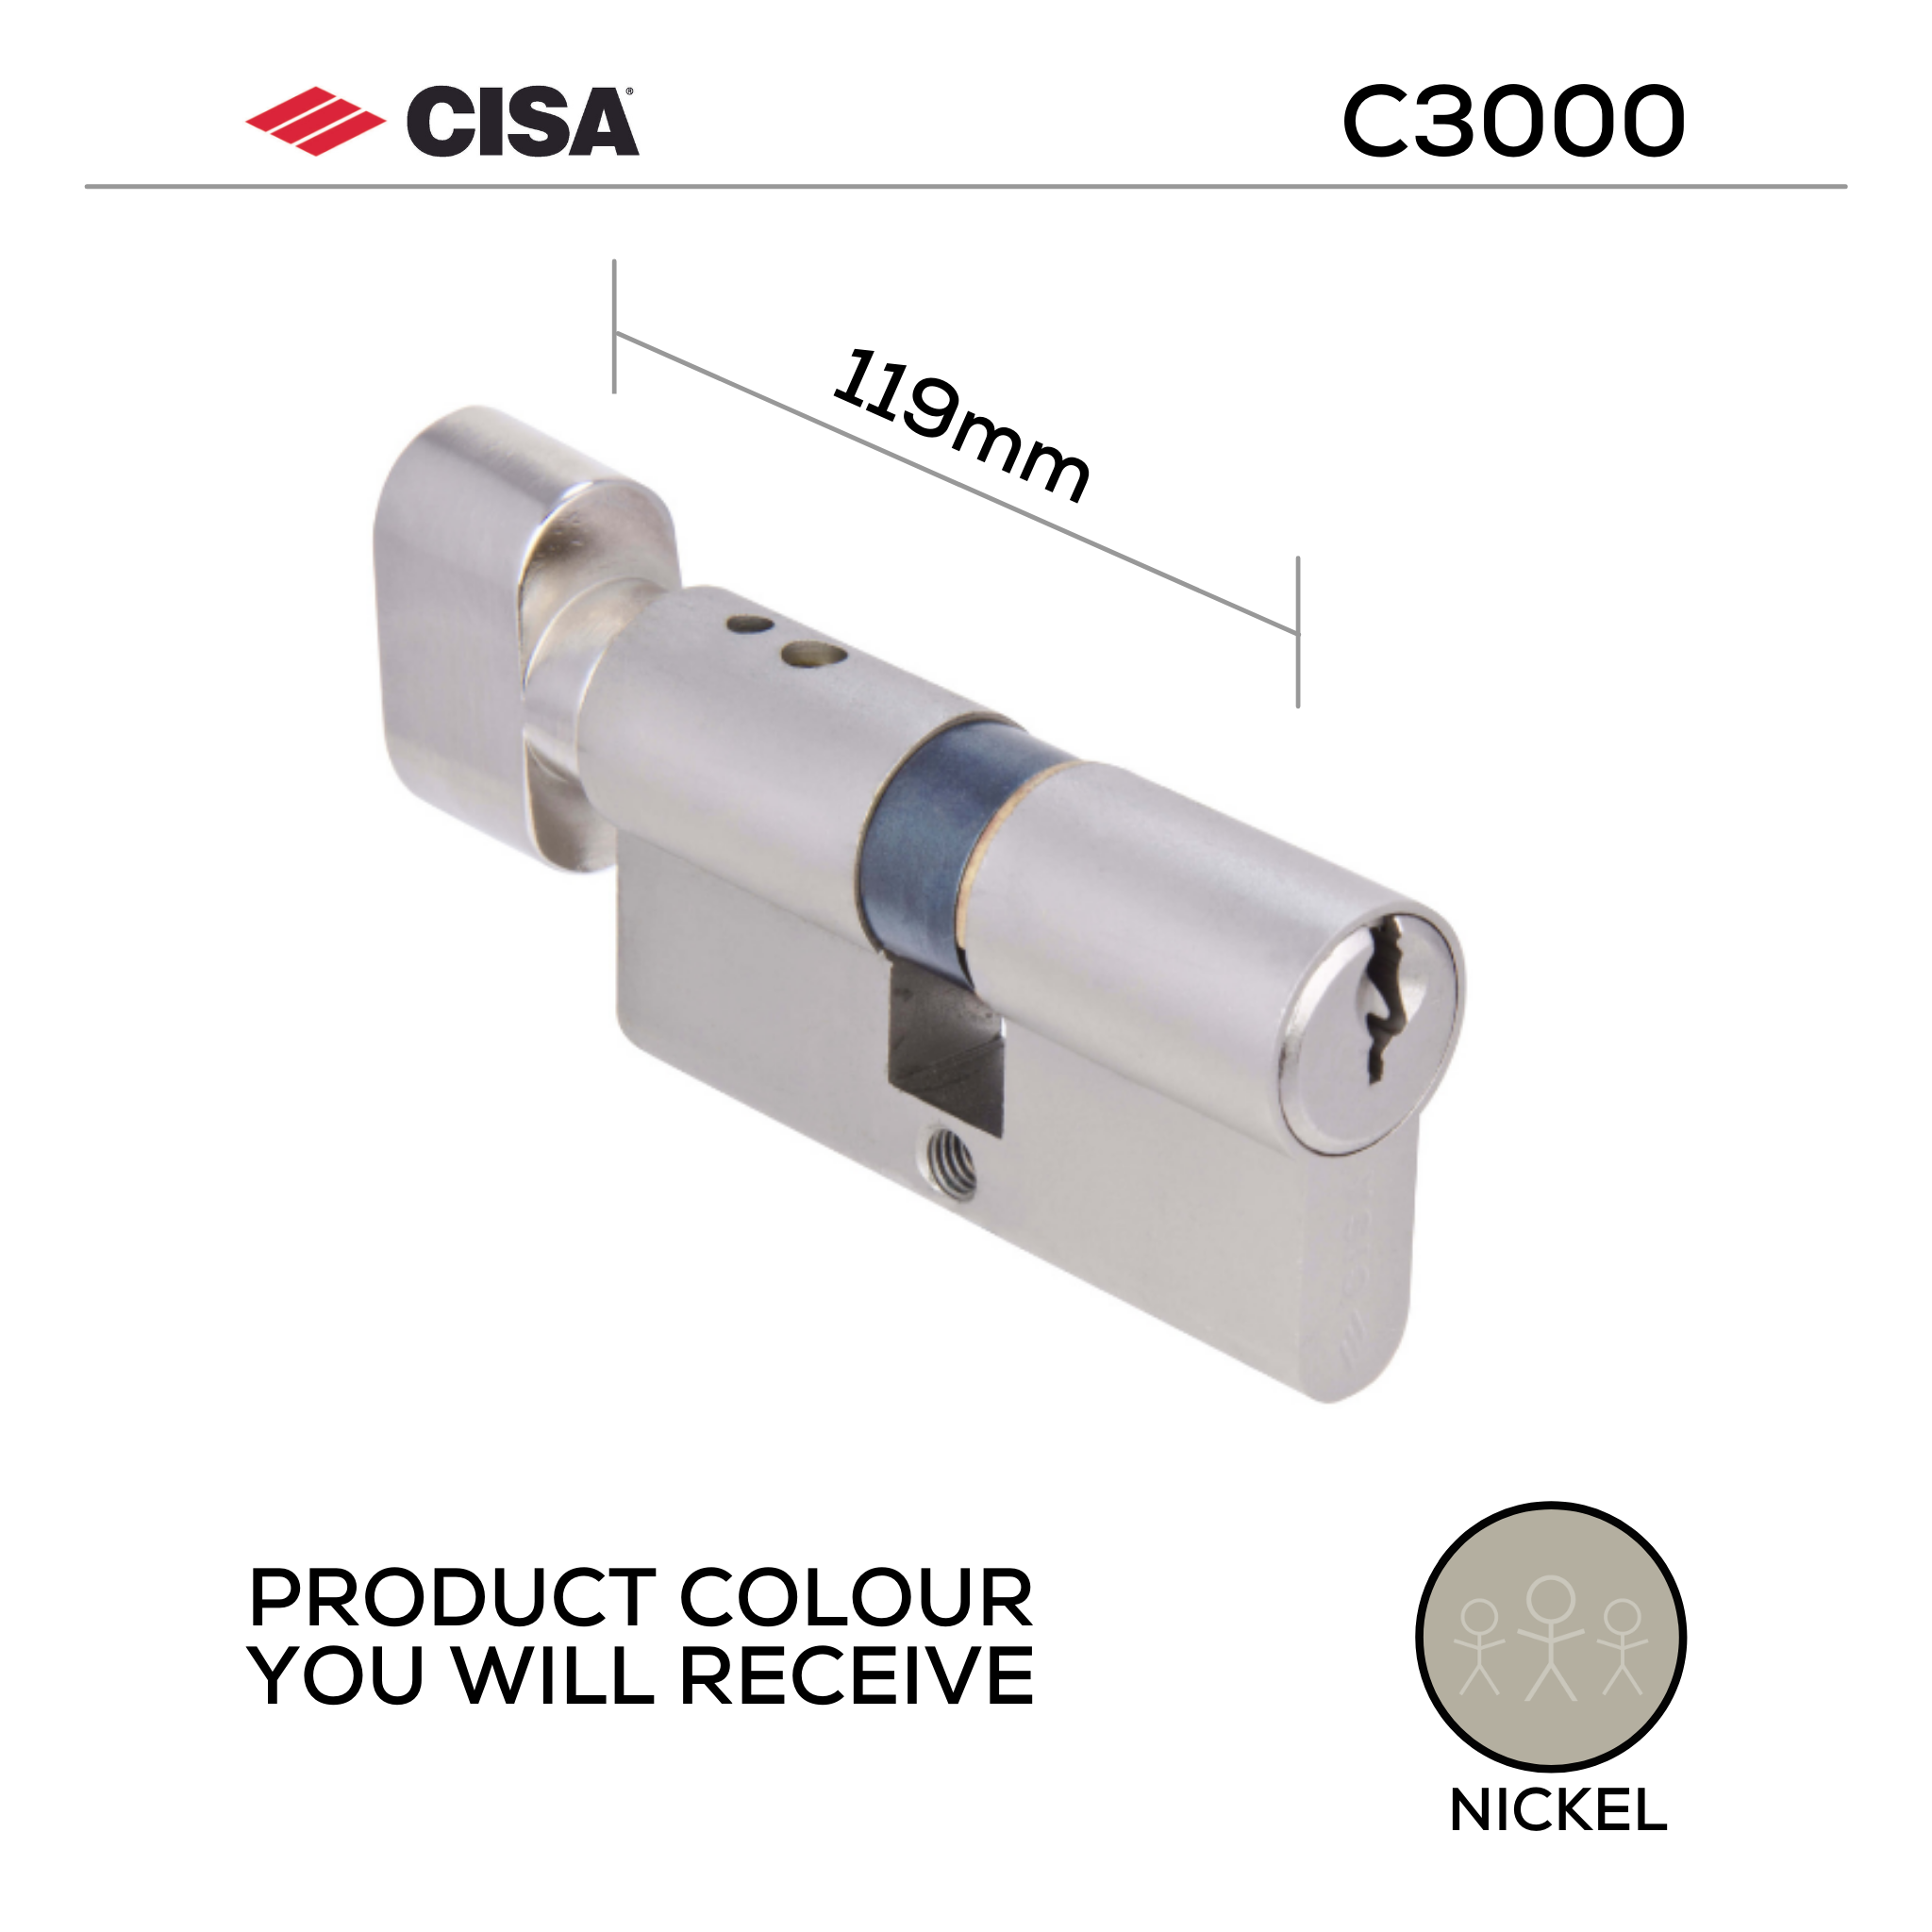 0N312-40-12-KD, 119mm - 59.5/59.5, Double Cylinder, C3000, Thumbturn to Key, Keyed to Differ (Standard), 3 Keys, 6 Pin, Nickel, CISA